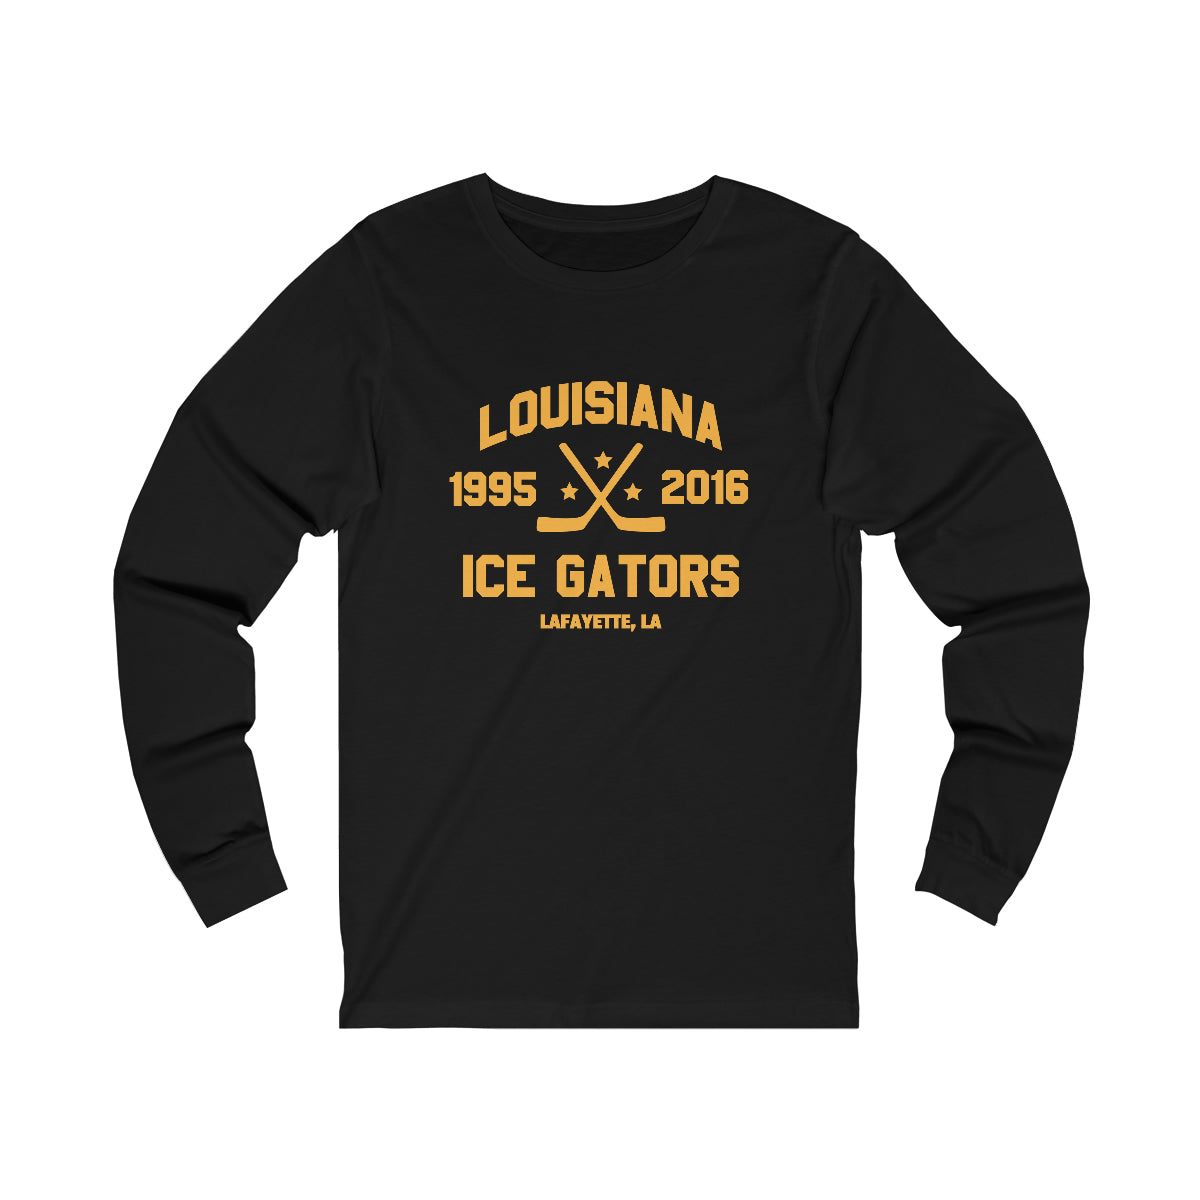 Louisiana Ice Gators Long Sleeve Shirt